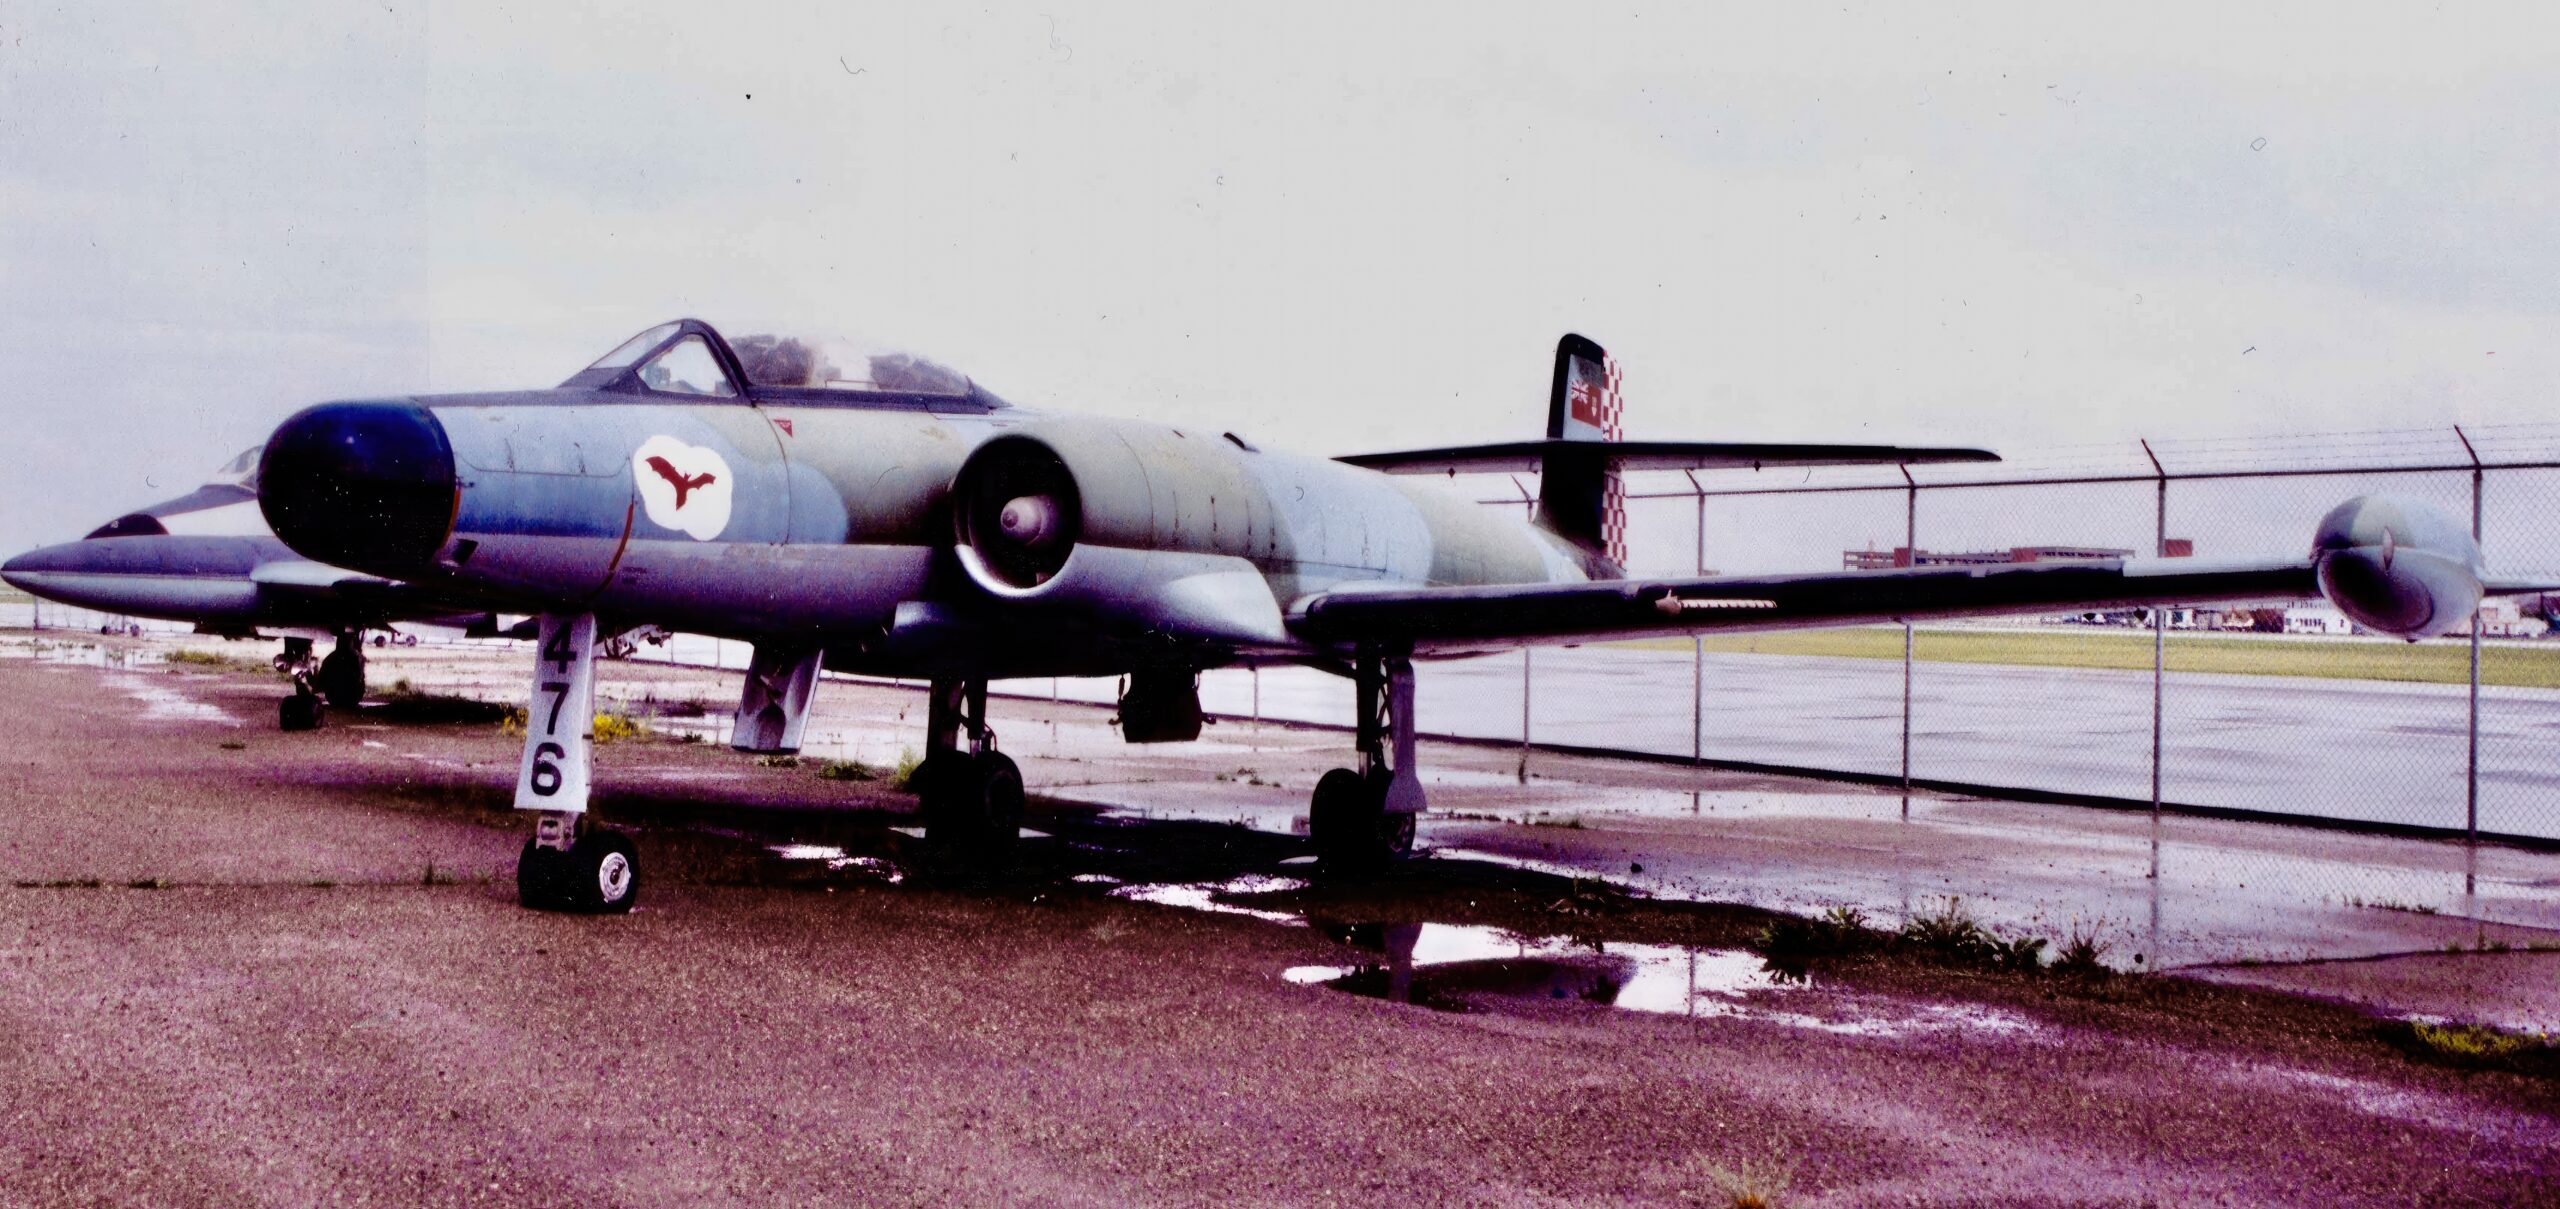 Avro Canada CF-100 "Canuck" interceptor